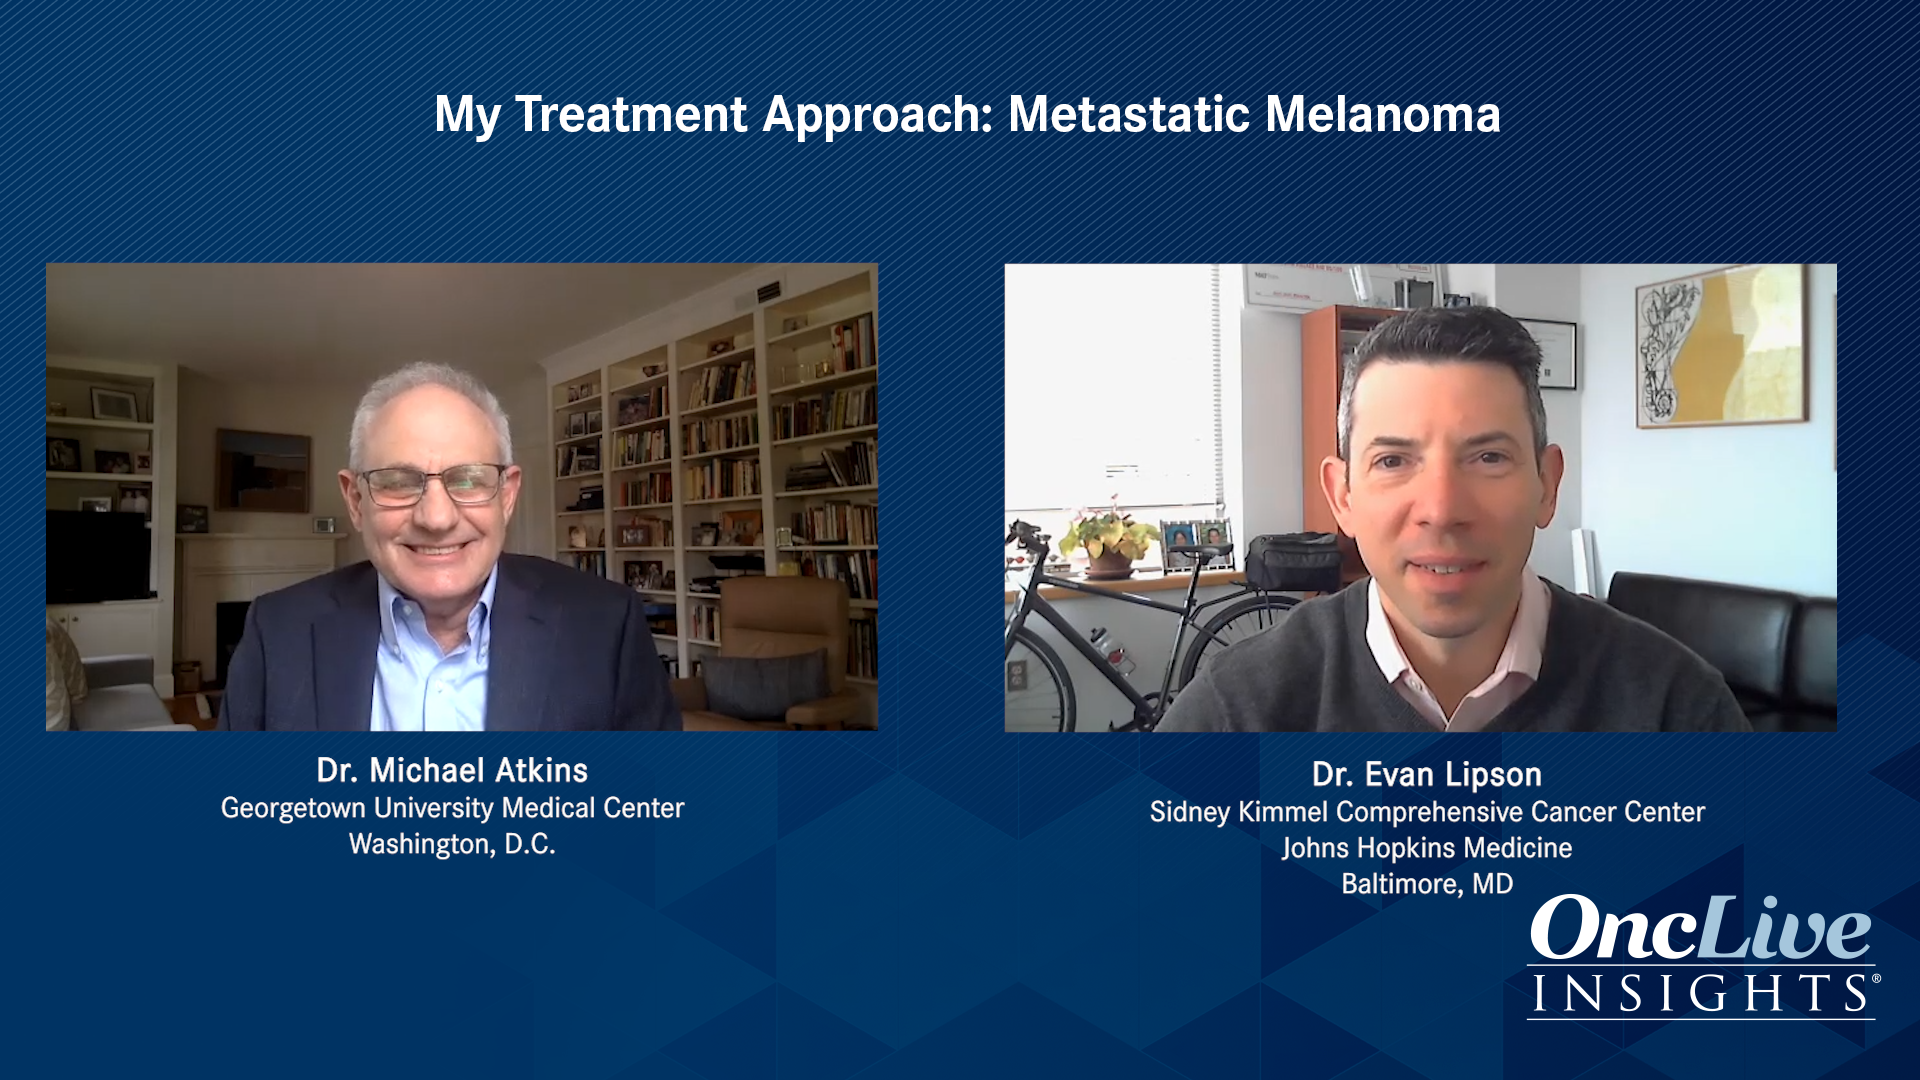 My Treatment Approach: Metastatic Melanoma